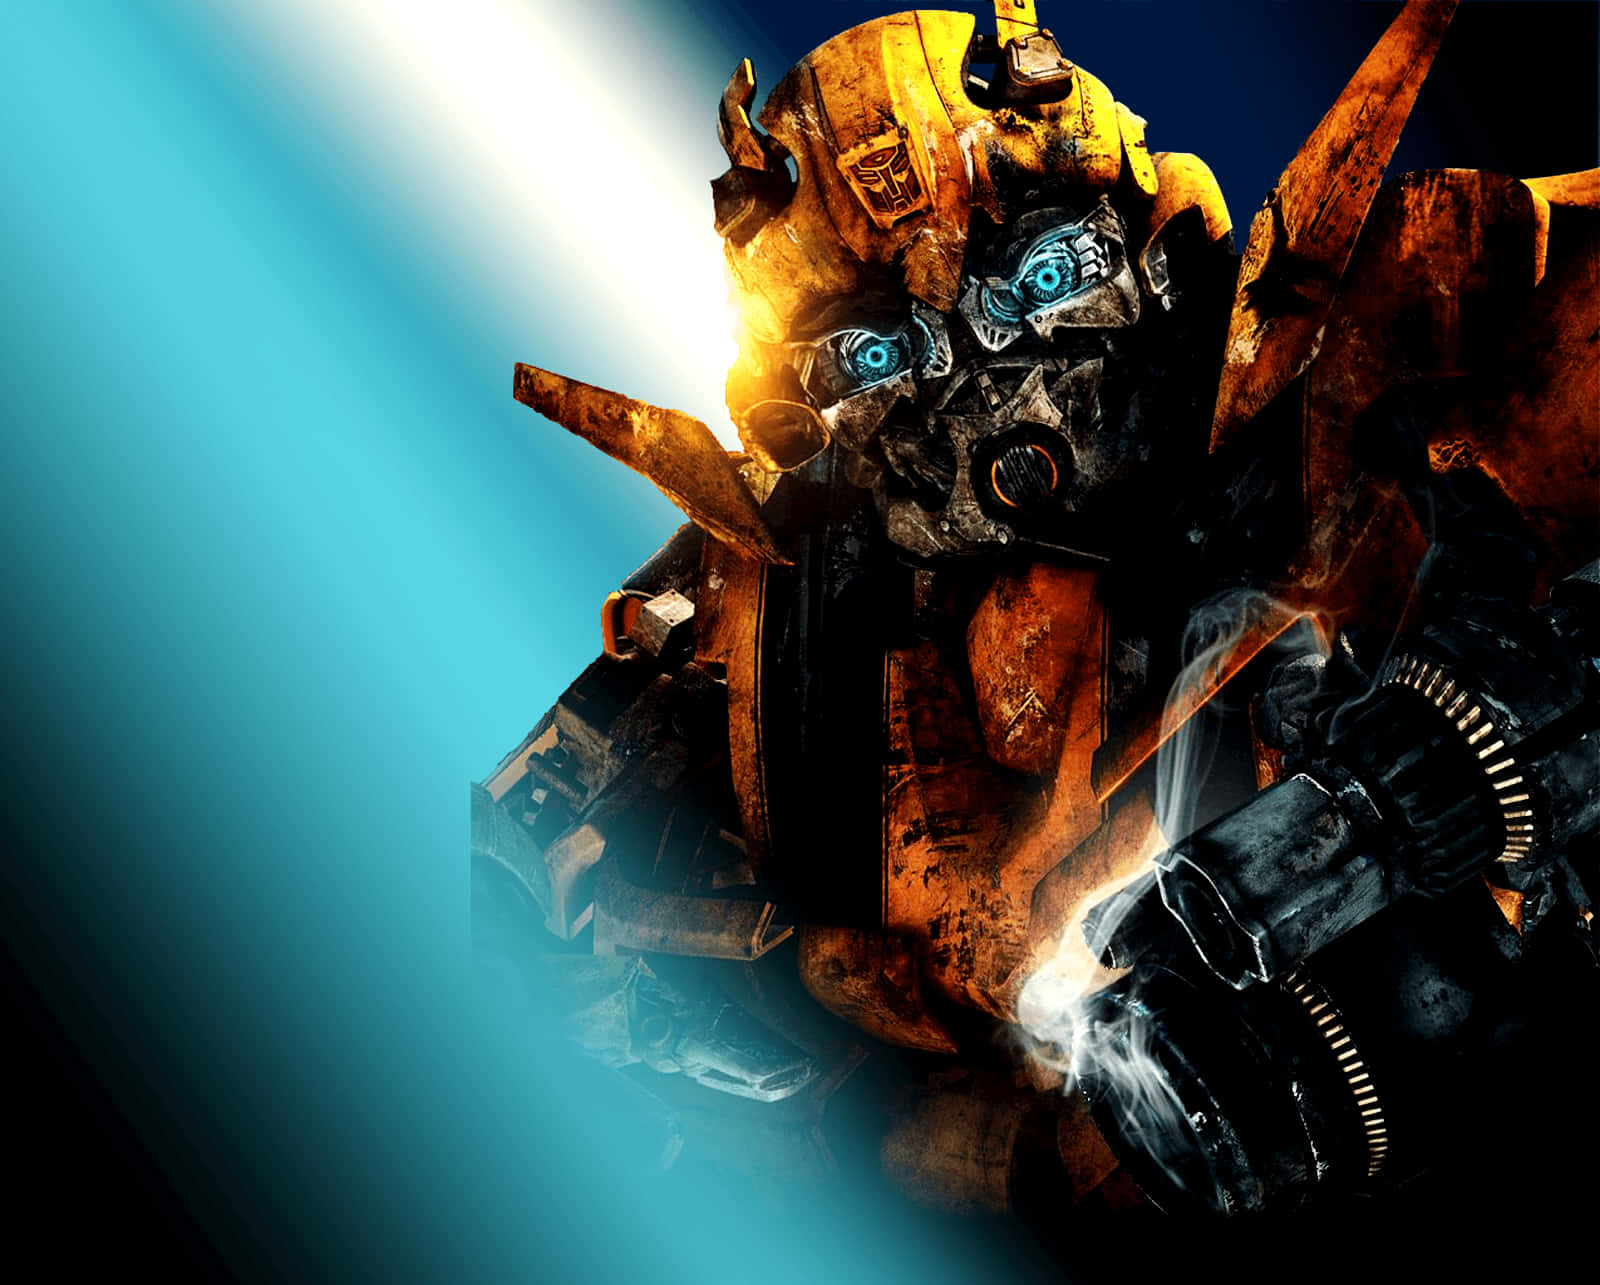 Mød Bumblebee, en modig Autobot fra Transformers universet. Wallpaper